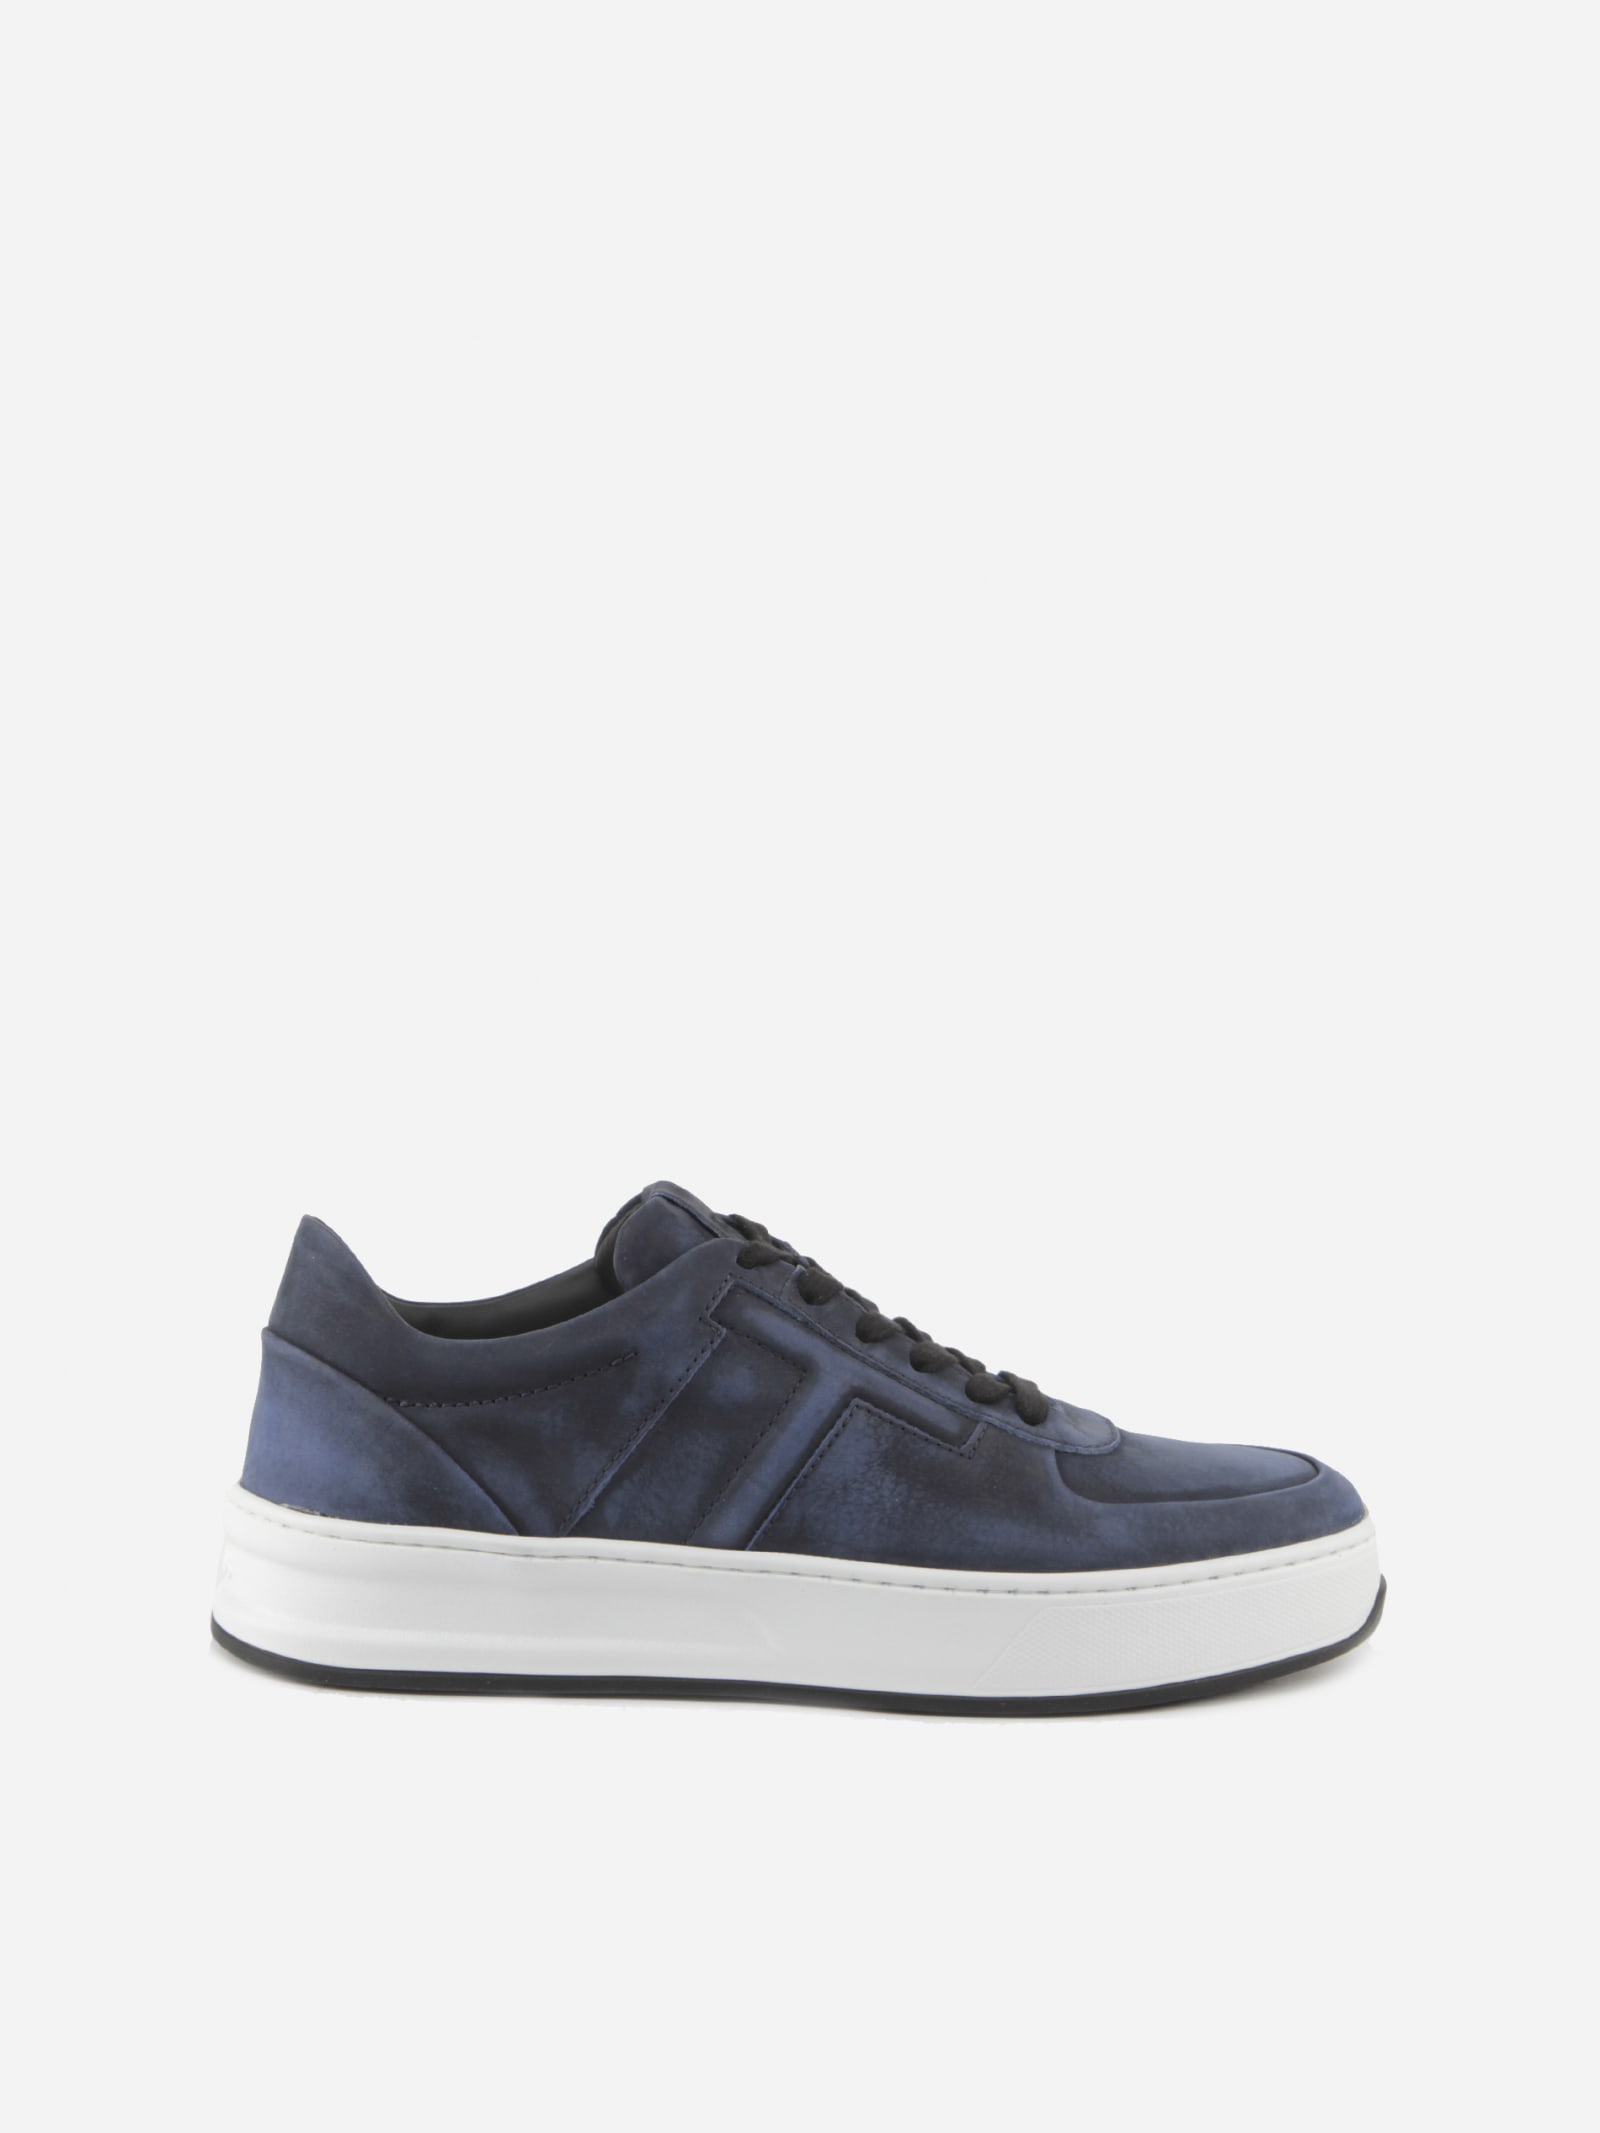 Tods Blue Nabuk Sneaker In Suede